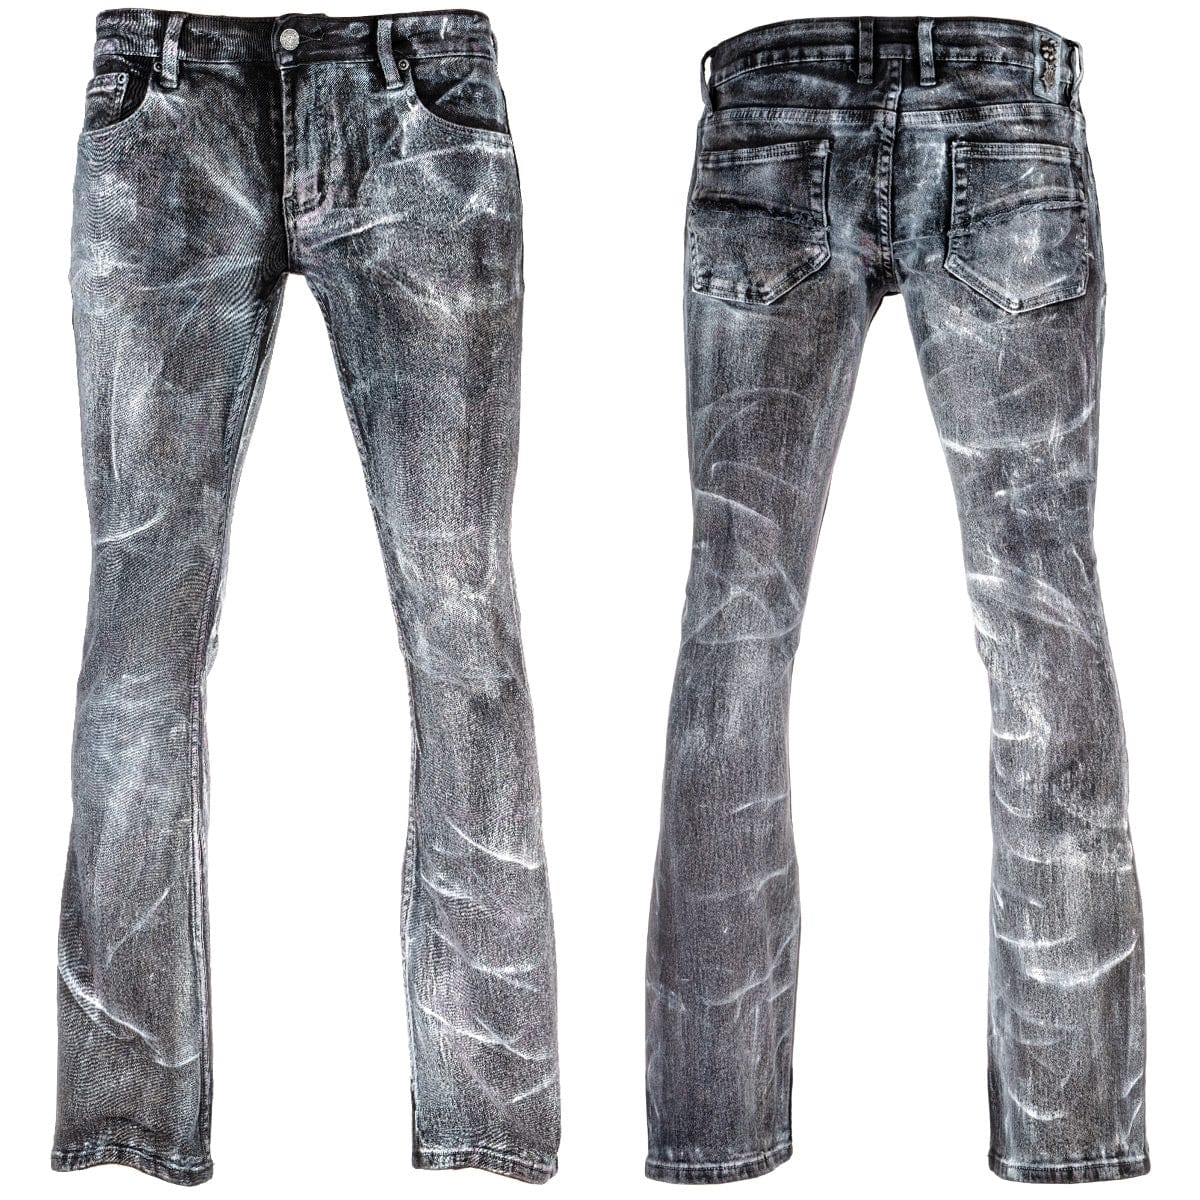 Custom Chop Shop Pants Wornstar Custom Jeans - White Frost Alloy Washed